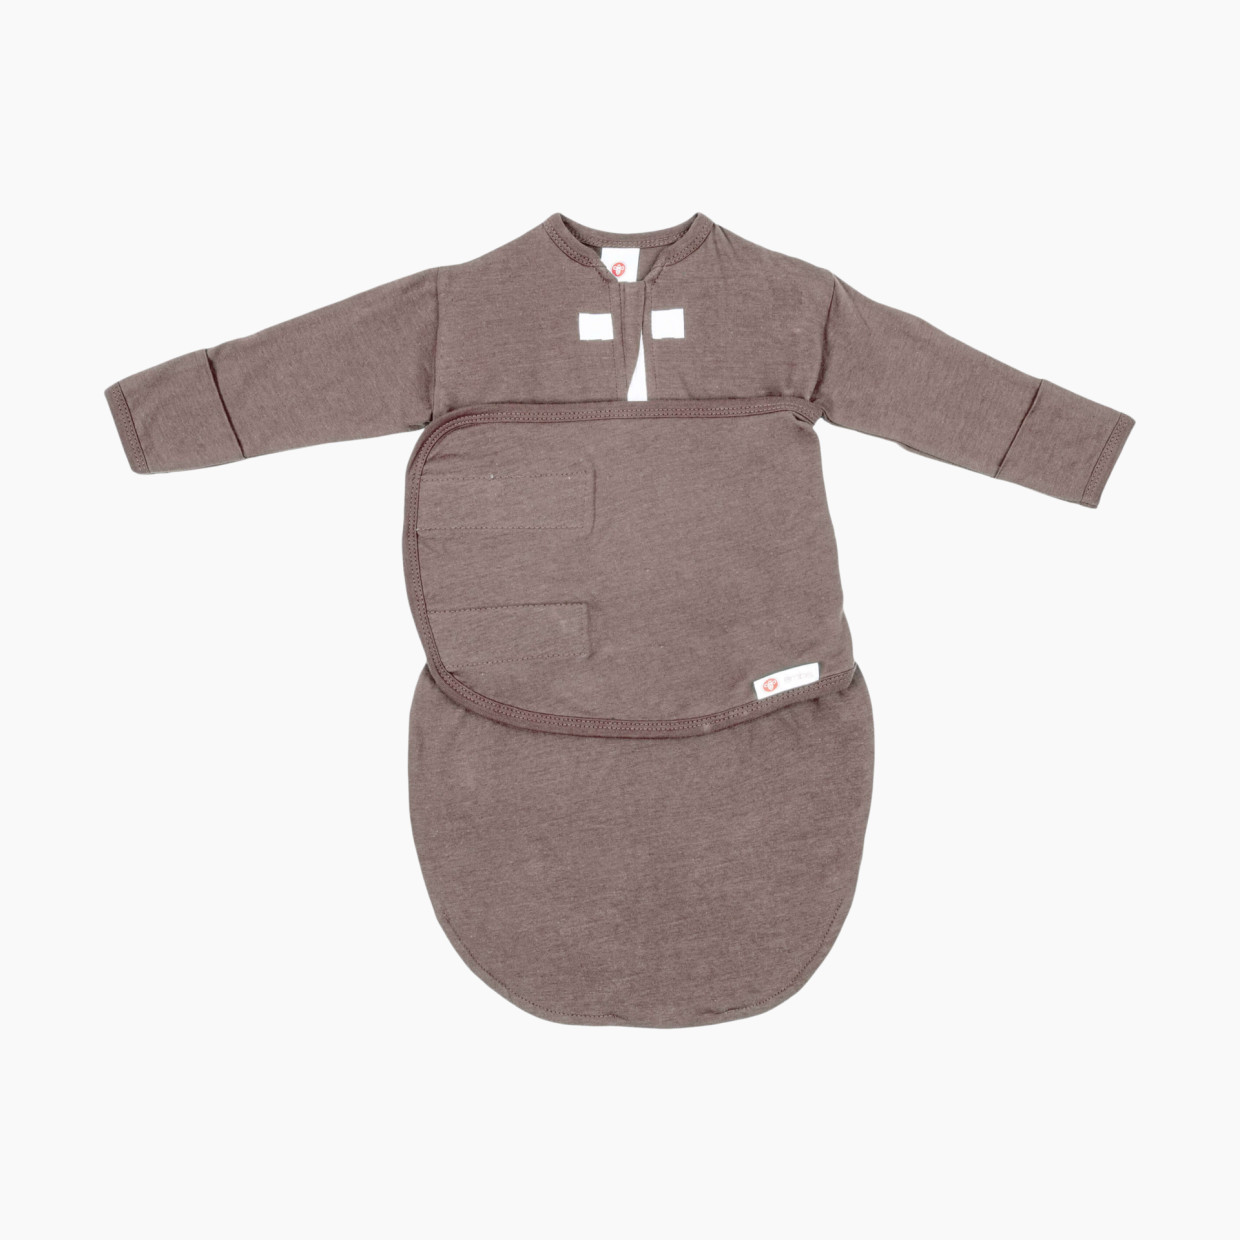 Embe Babies Long Sleeve Swaddle Sack - Cocoa, Newborn 6-14lbs.